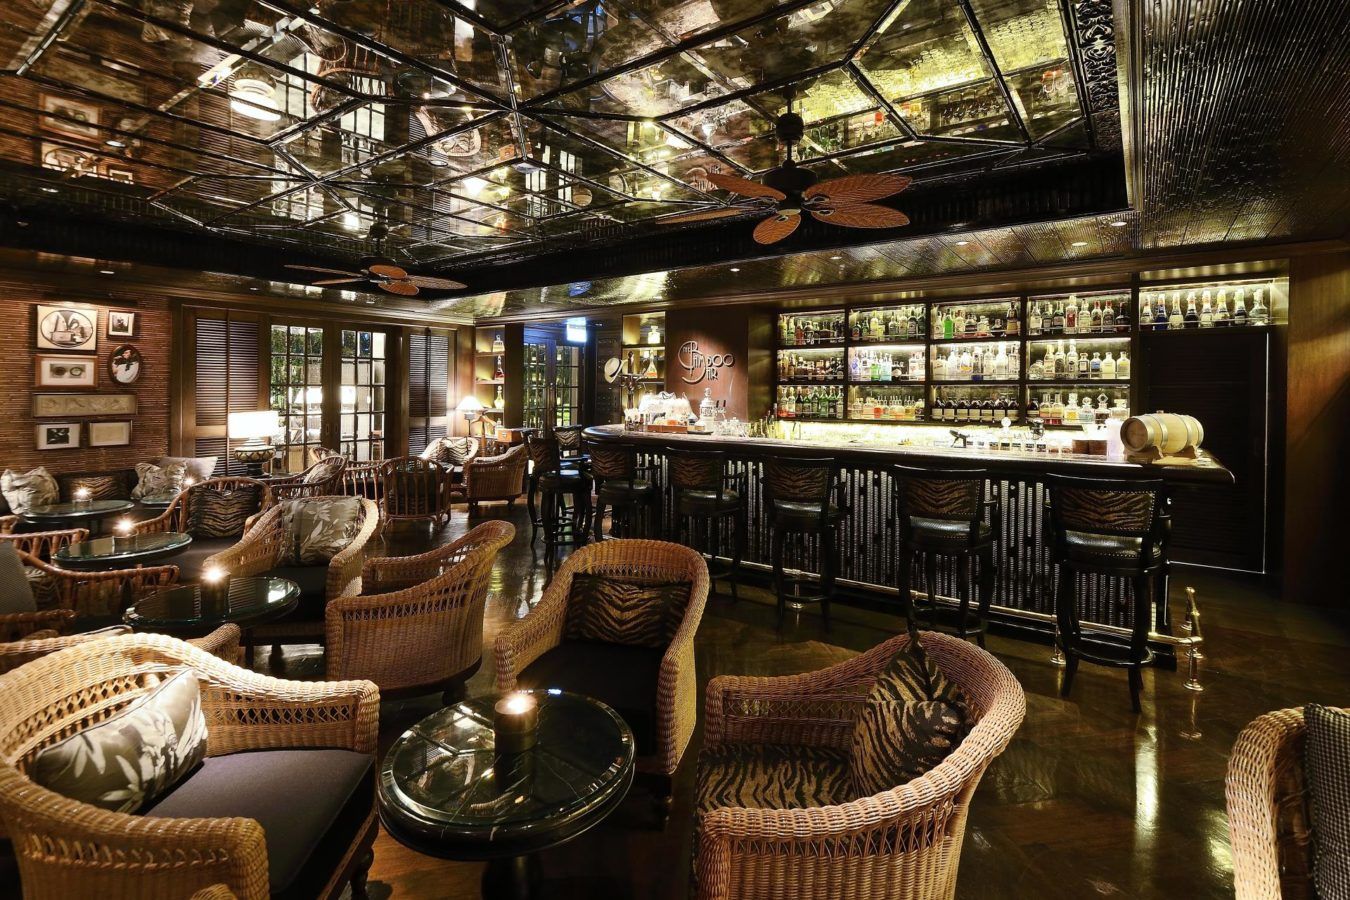 Asia’s 50 Best Bars 2020: 5 Bangkok bars bring it home for Thailand